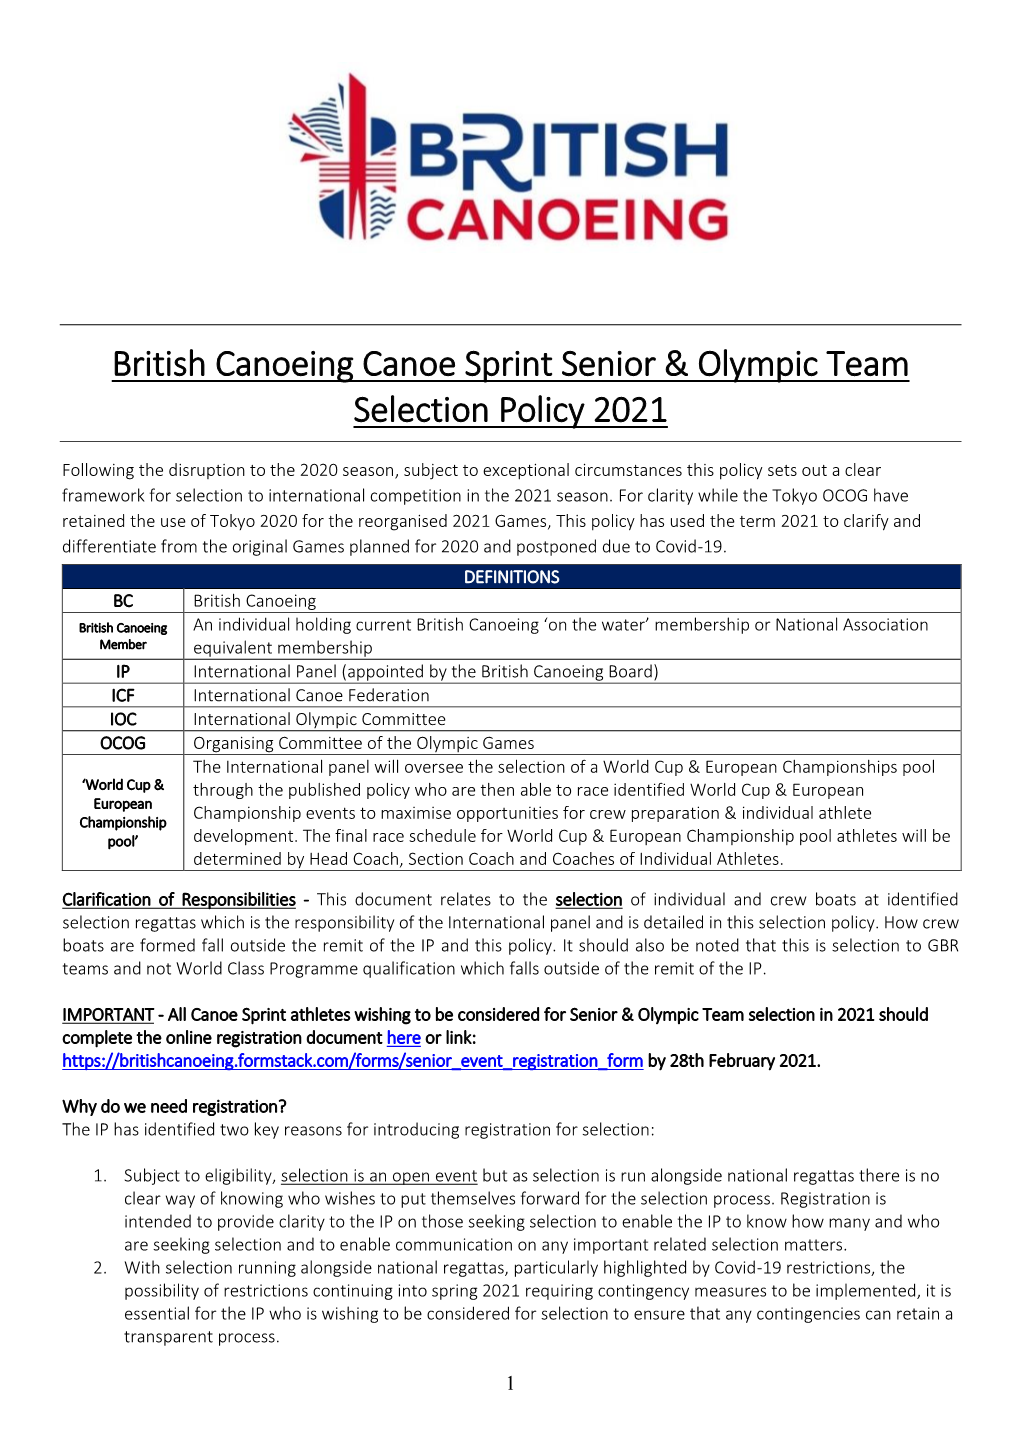 British Canoeing Canoe Sprint Senior & Olympic Team Selection Policy